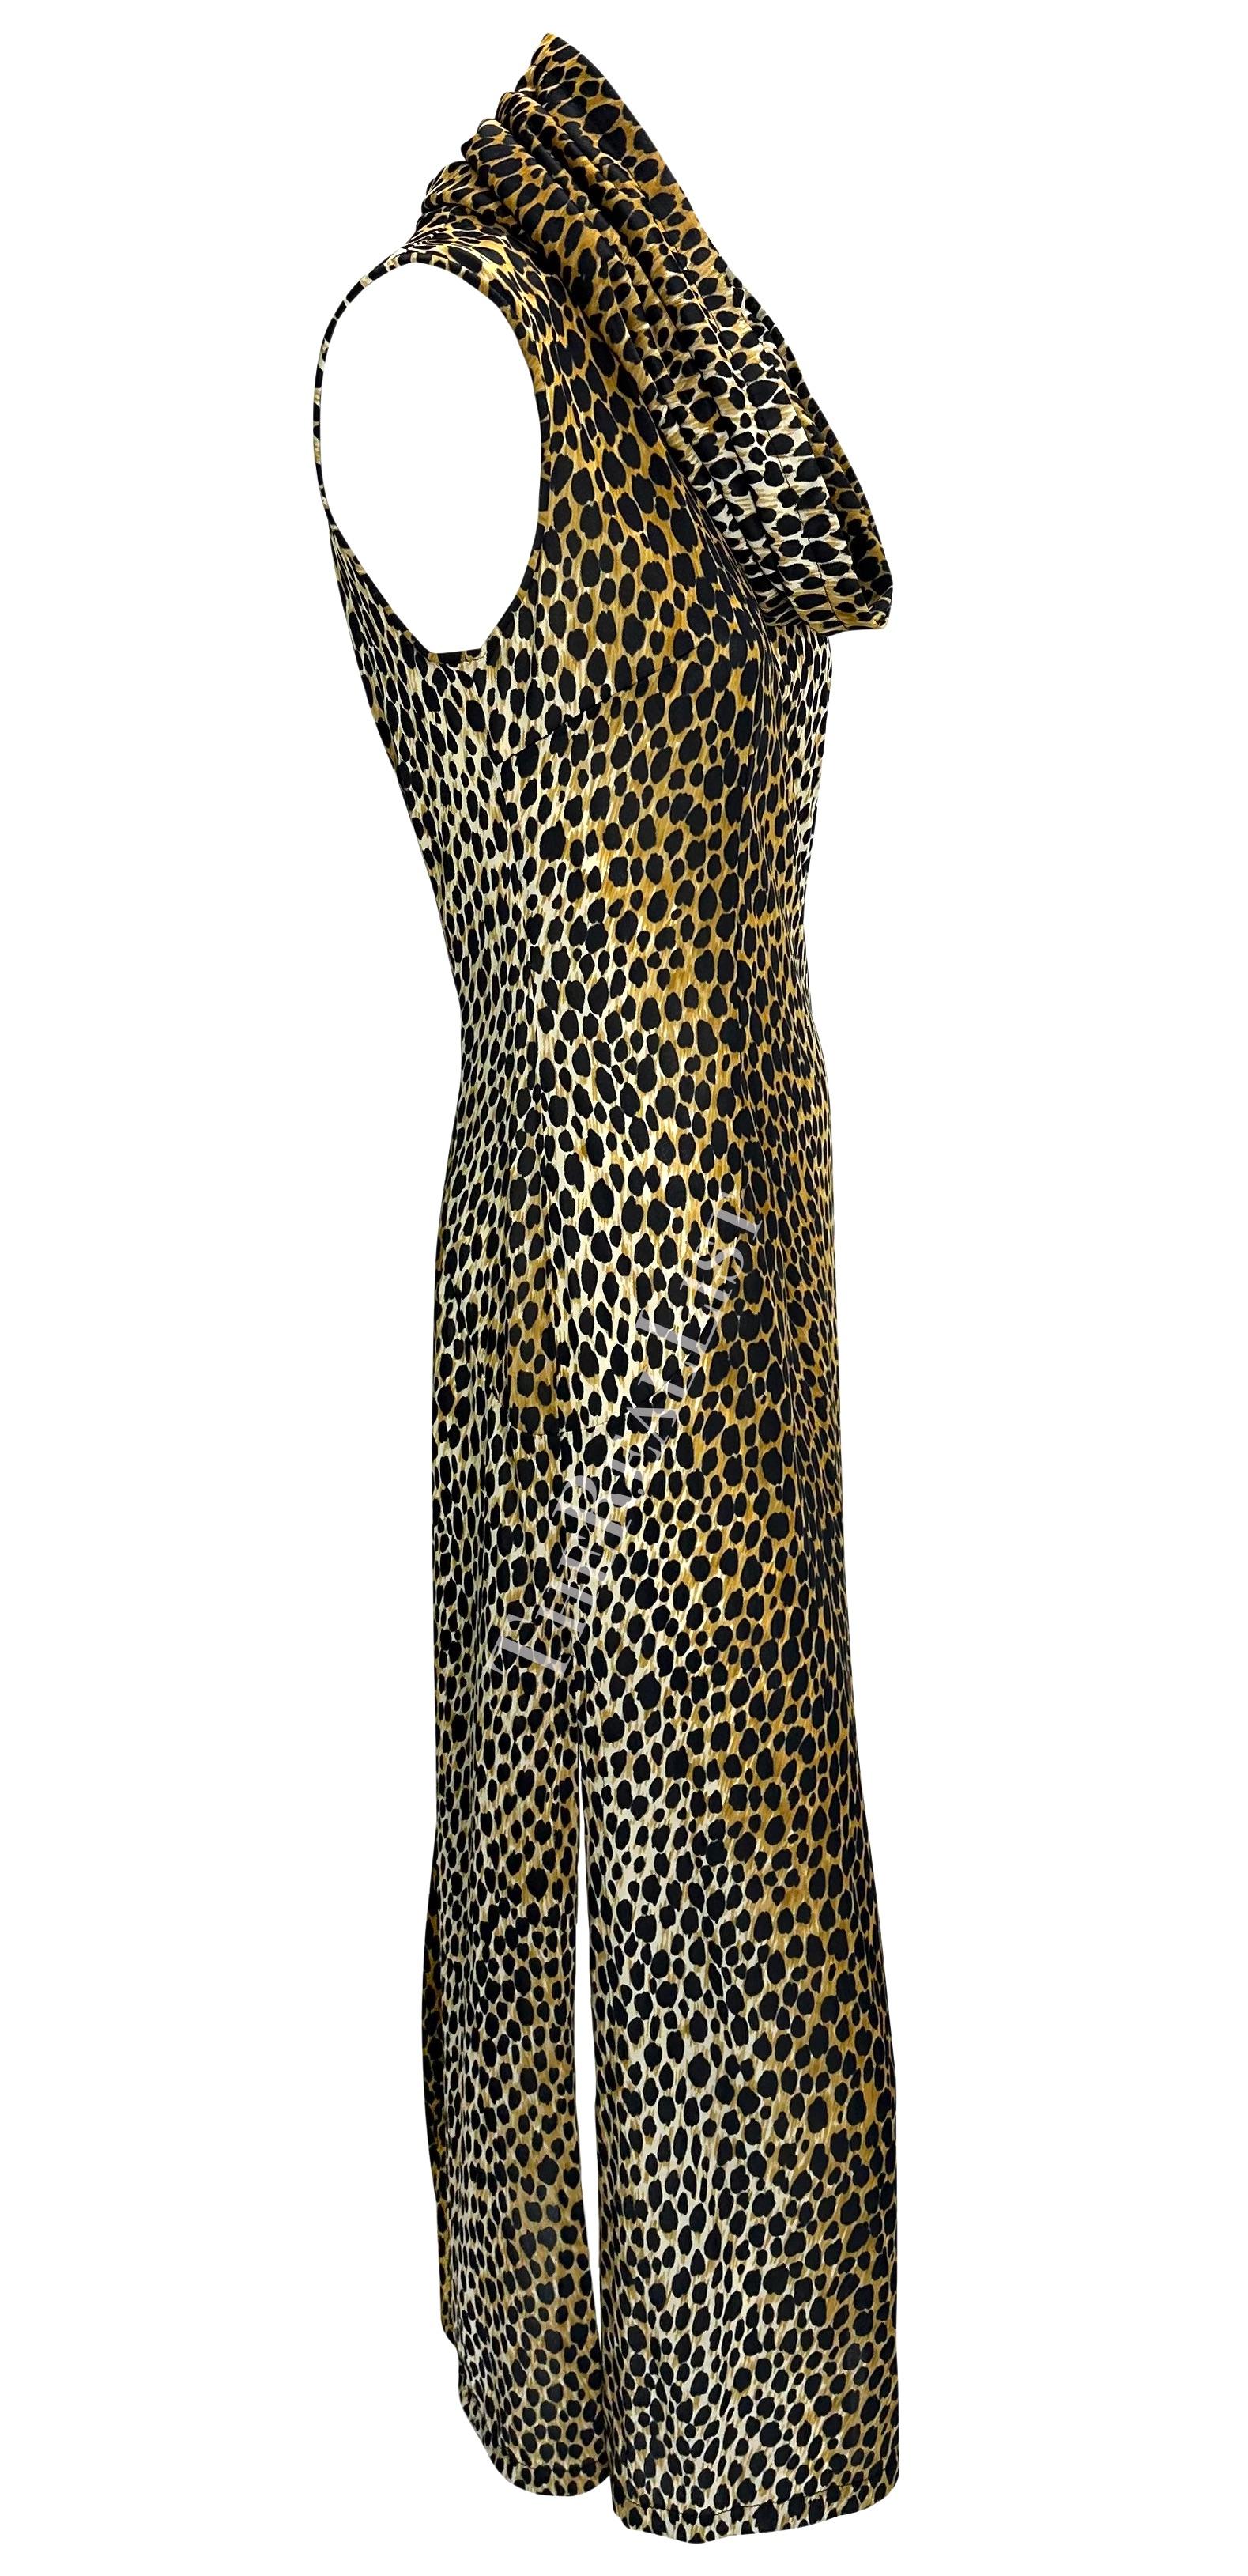 S/S 1996 Dolce & Gabbana Hooded Stretch Leopard Print Hit Slit Dress For Sale 10